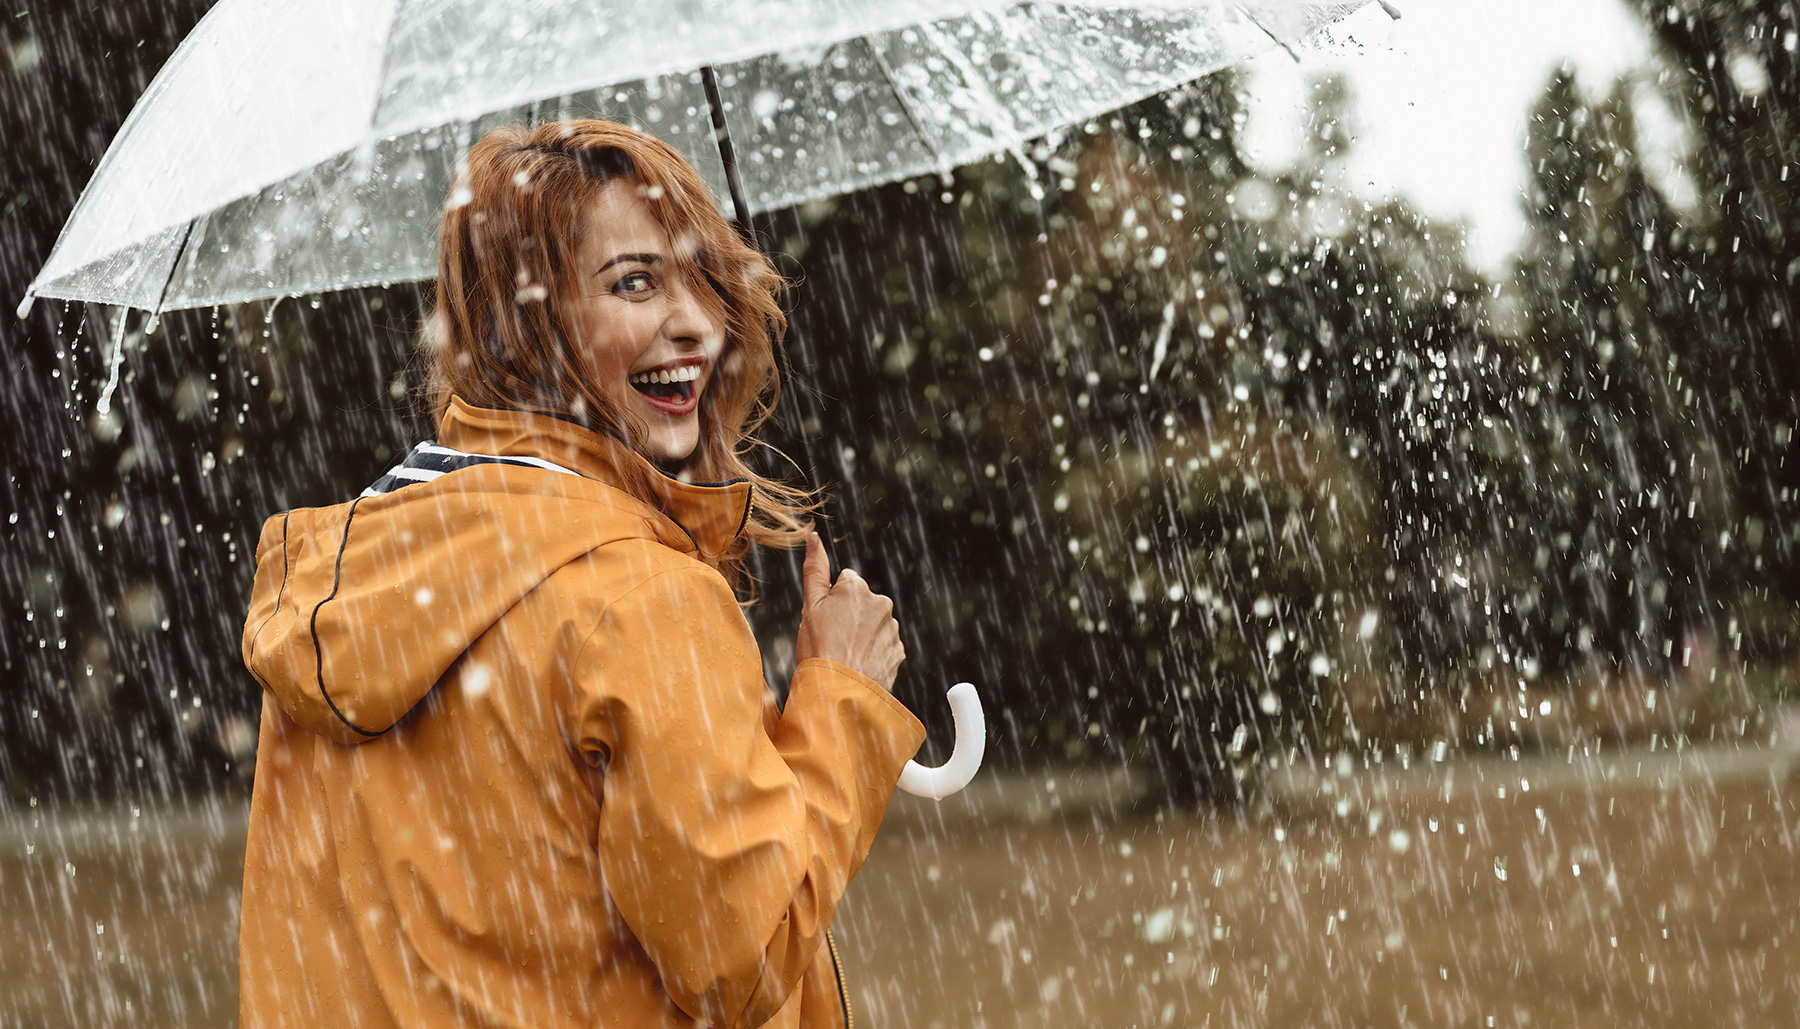 happy-woman-smiles-in-heavy-rain-with-umbrella